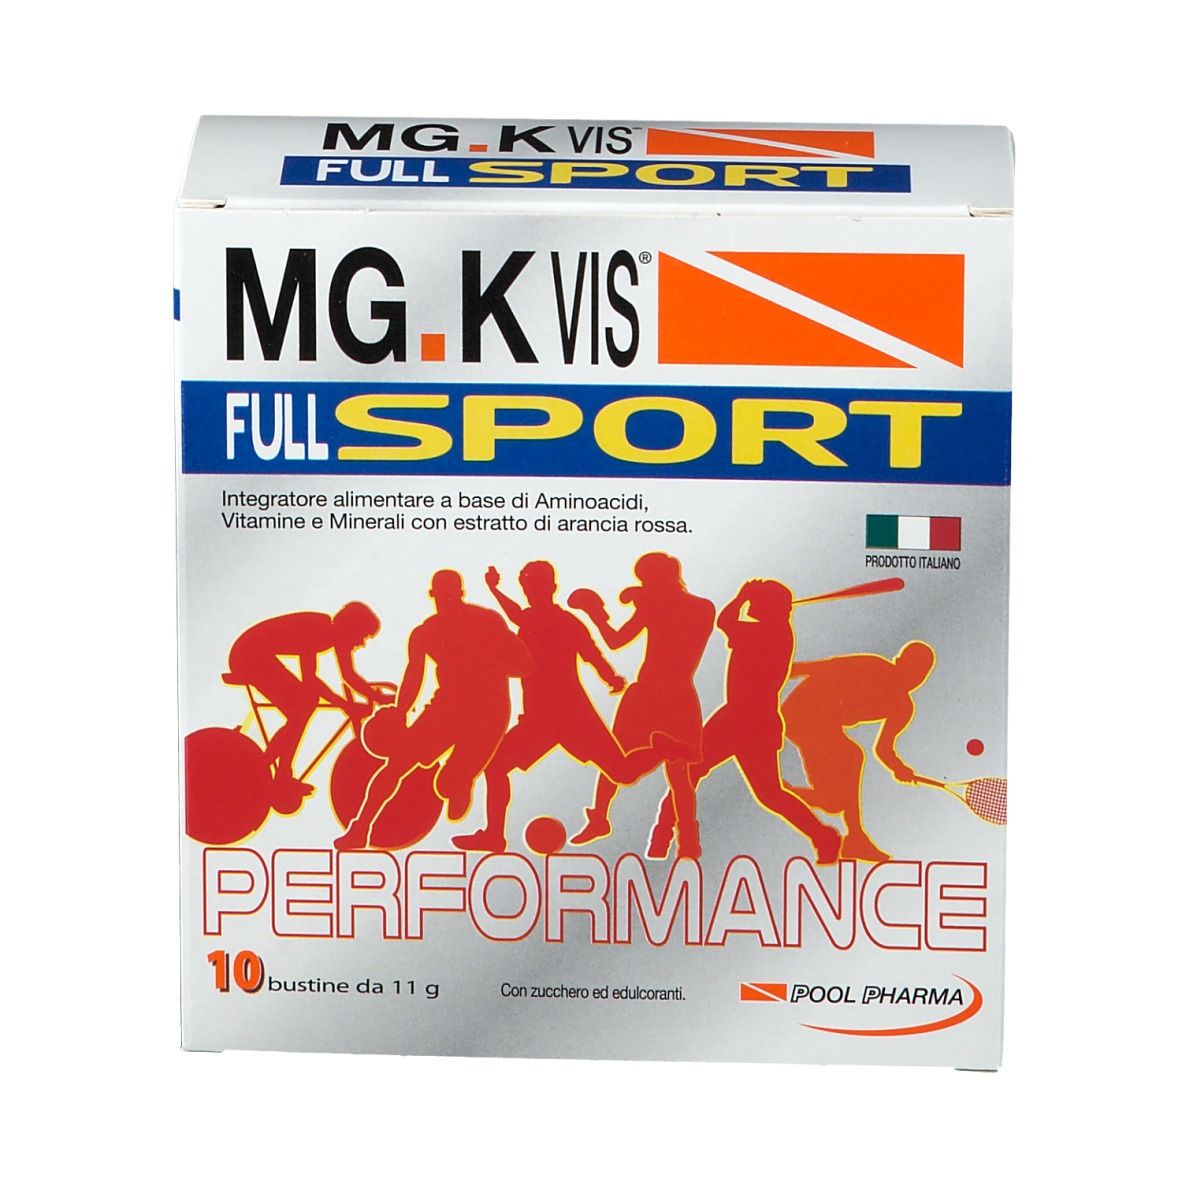 POOL PHARMA MG.K Vis® Full Sport